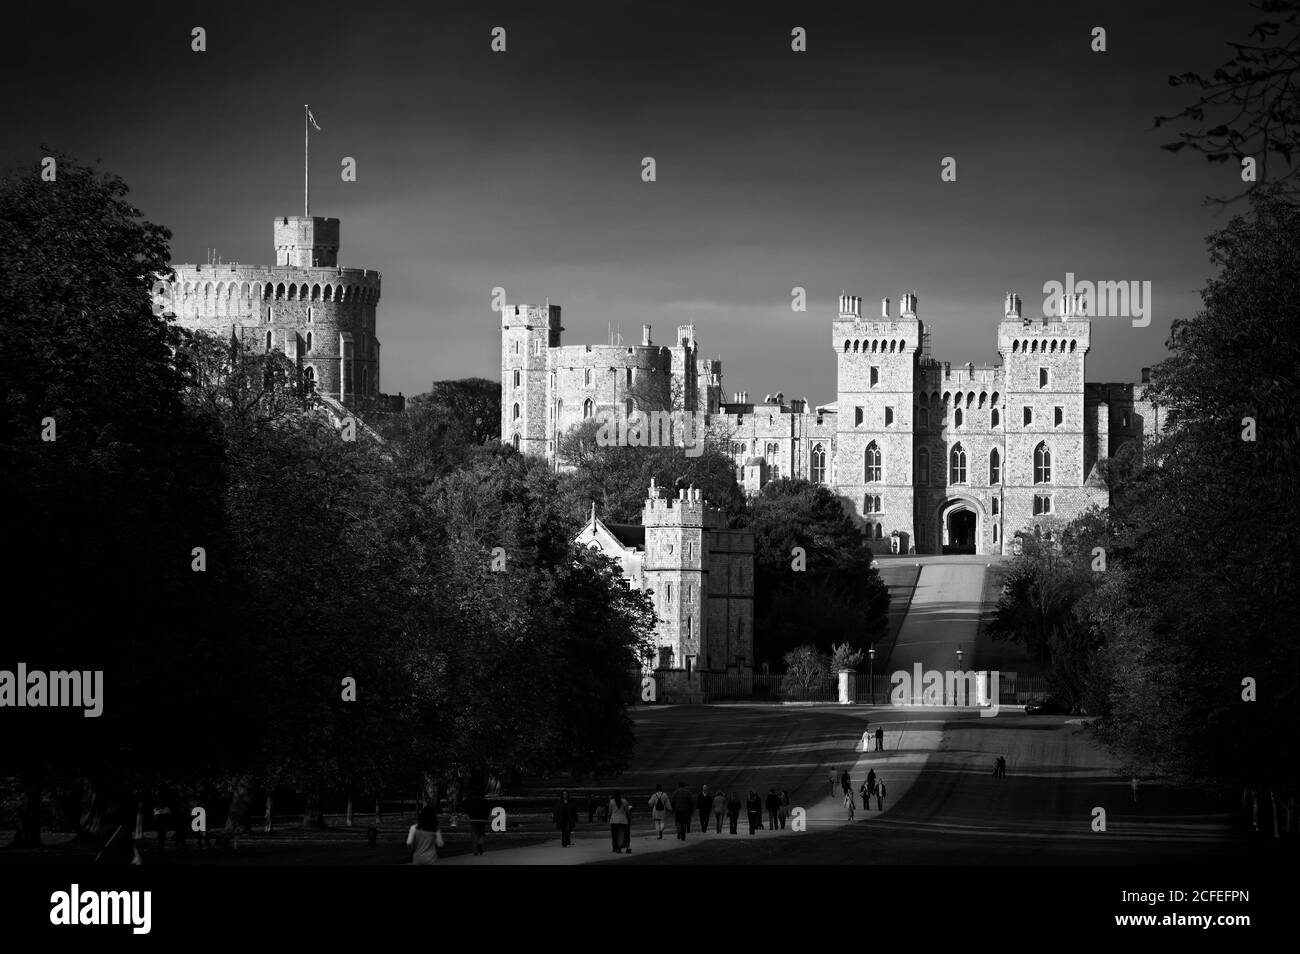 Monochrome image of the landscape Long Walk of Windsor Castle park in Berkshire England UK a popular English travel destination tourist attraction lan Stock Photo